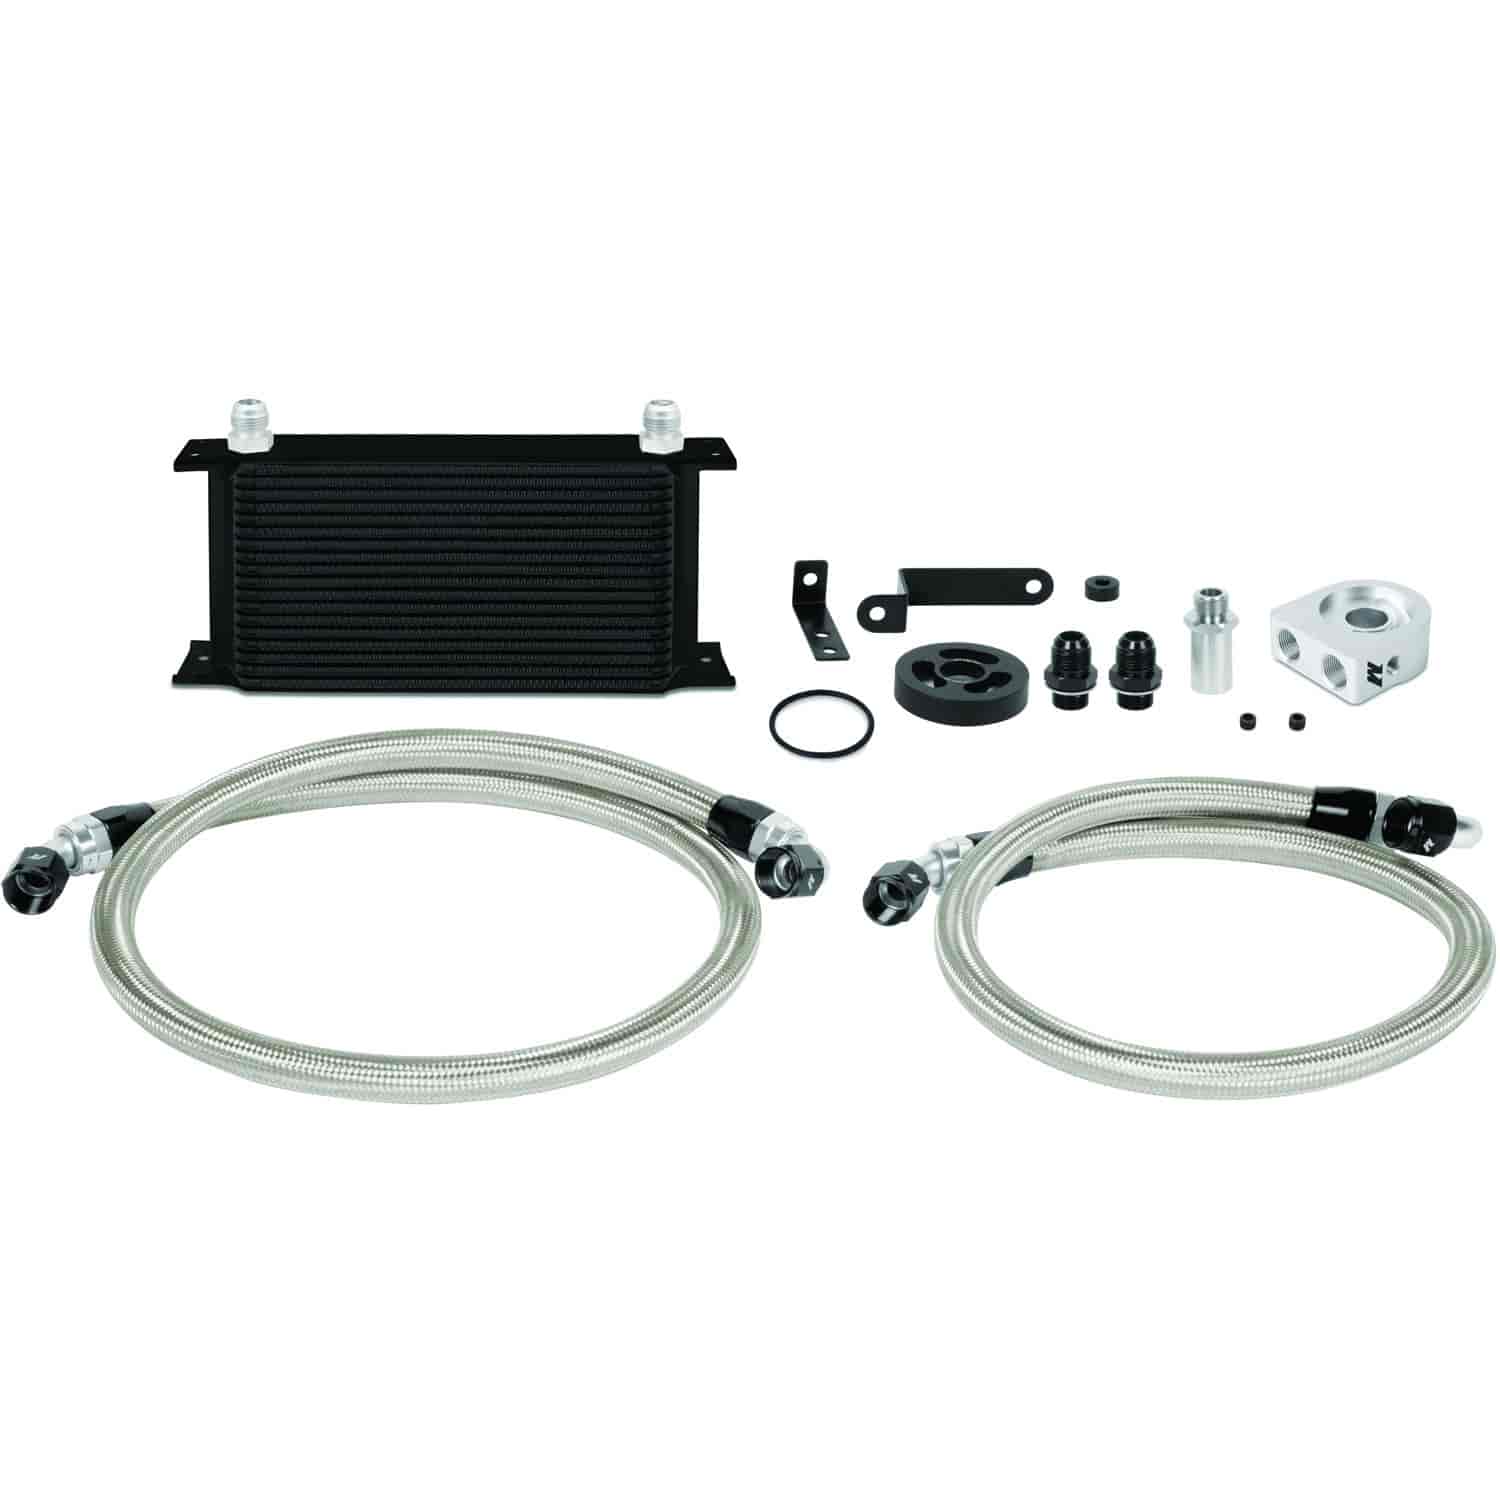 Subaru WRX Oil Cooler Kit Black - MFG Part No. MMOC-WRX-08BK